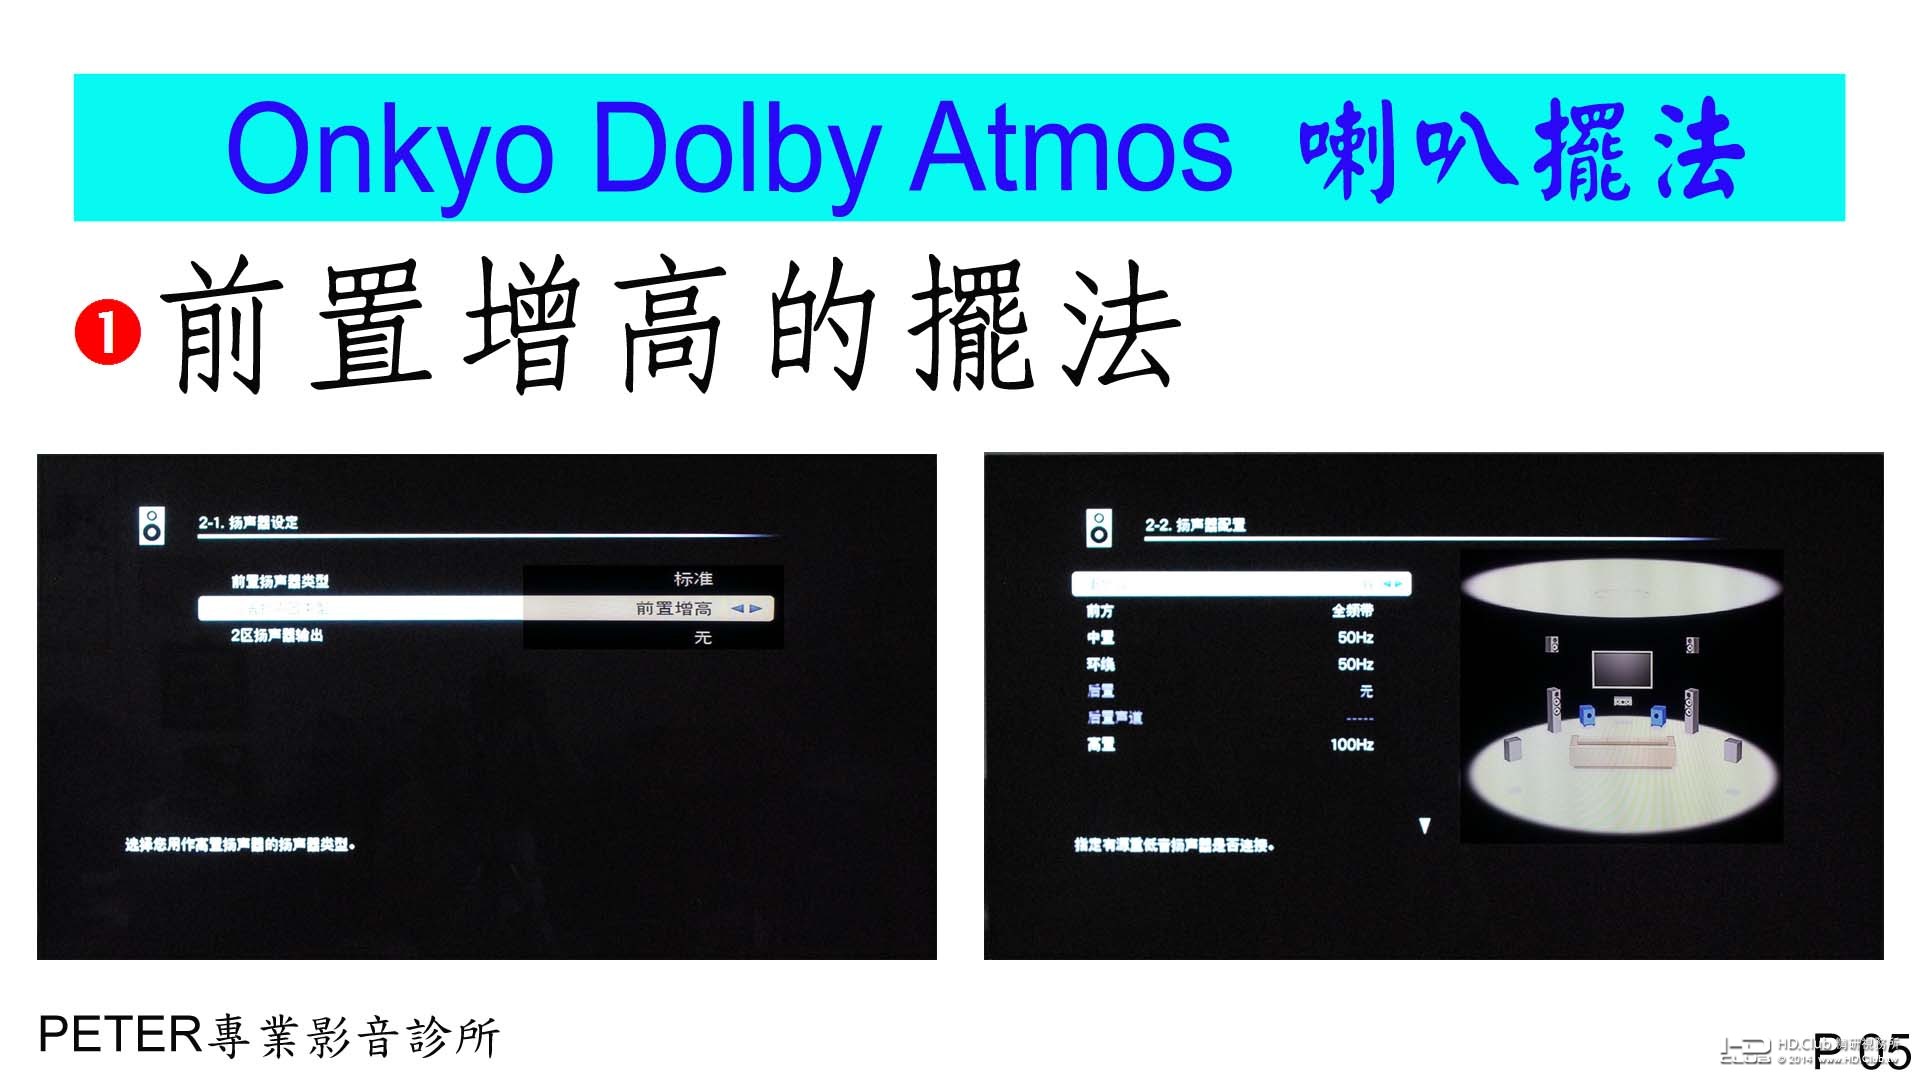 05 Onkyo Dolby Atmos 喇叭擺法.jpg